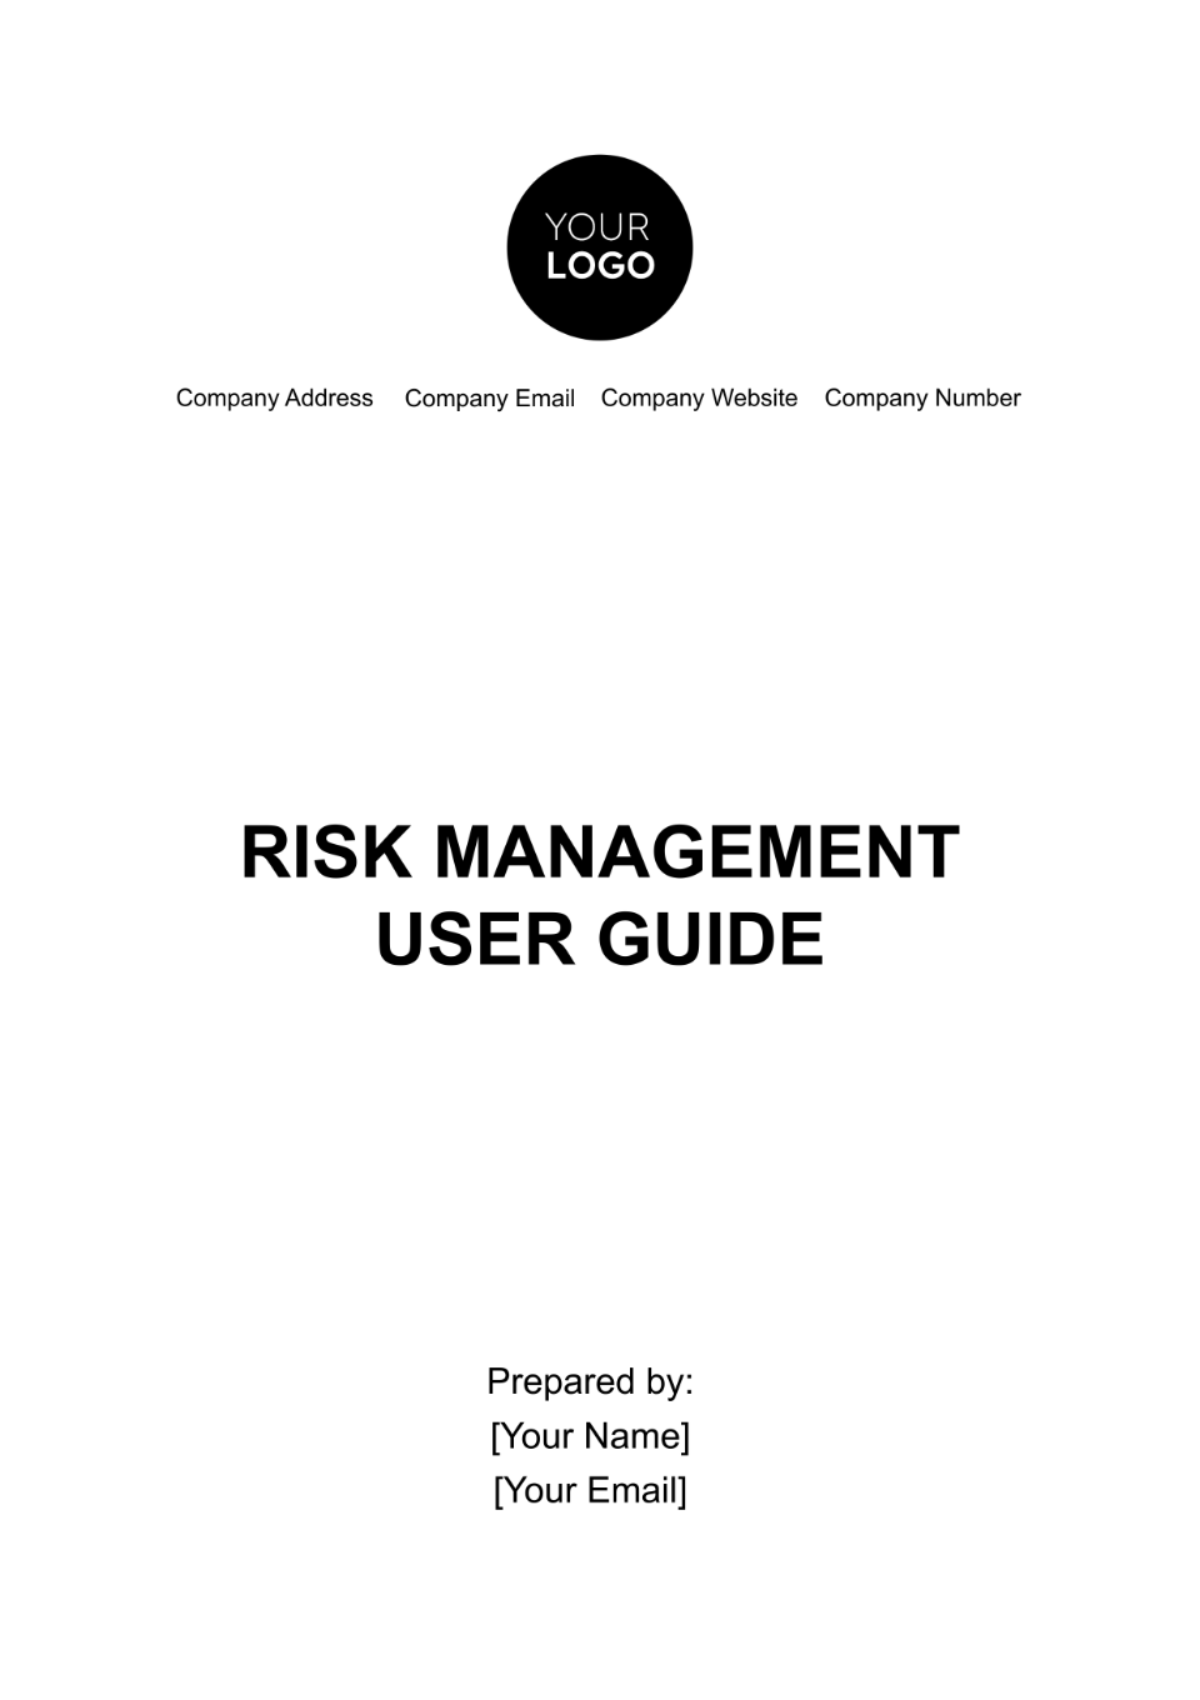 Risk Management User Guide Template